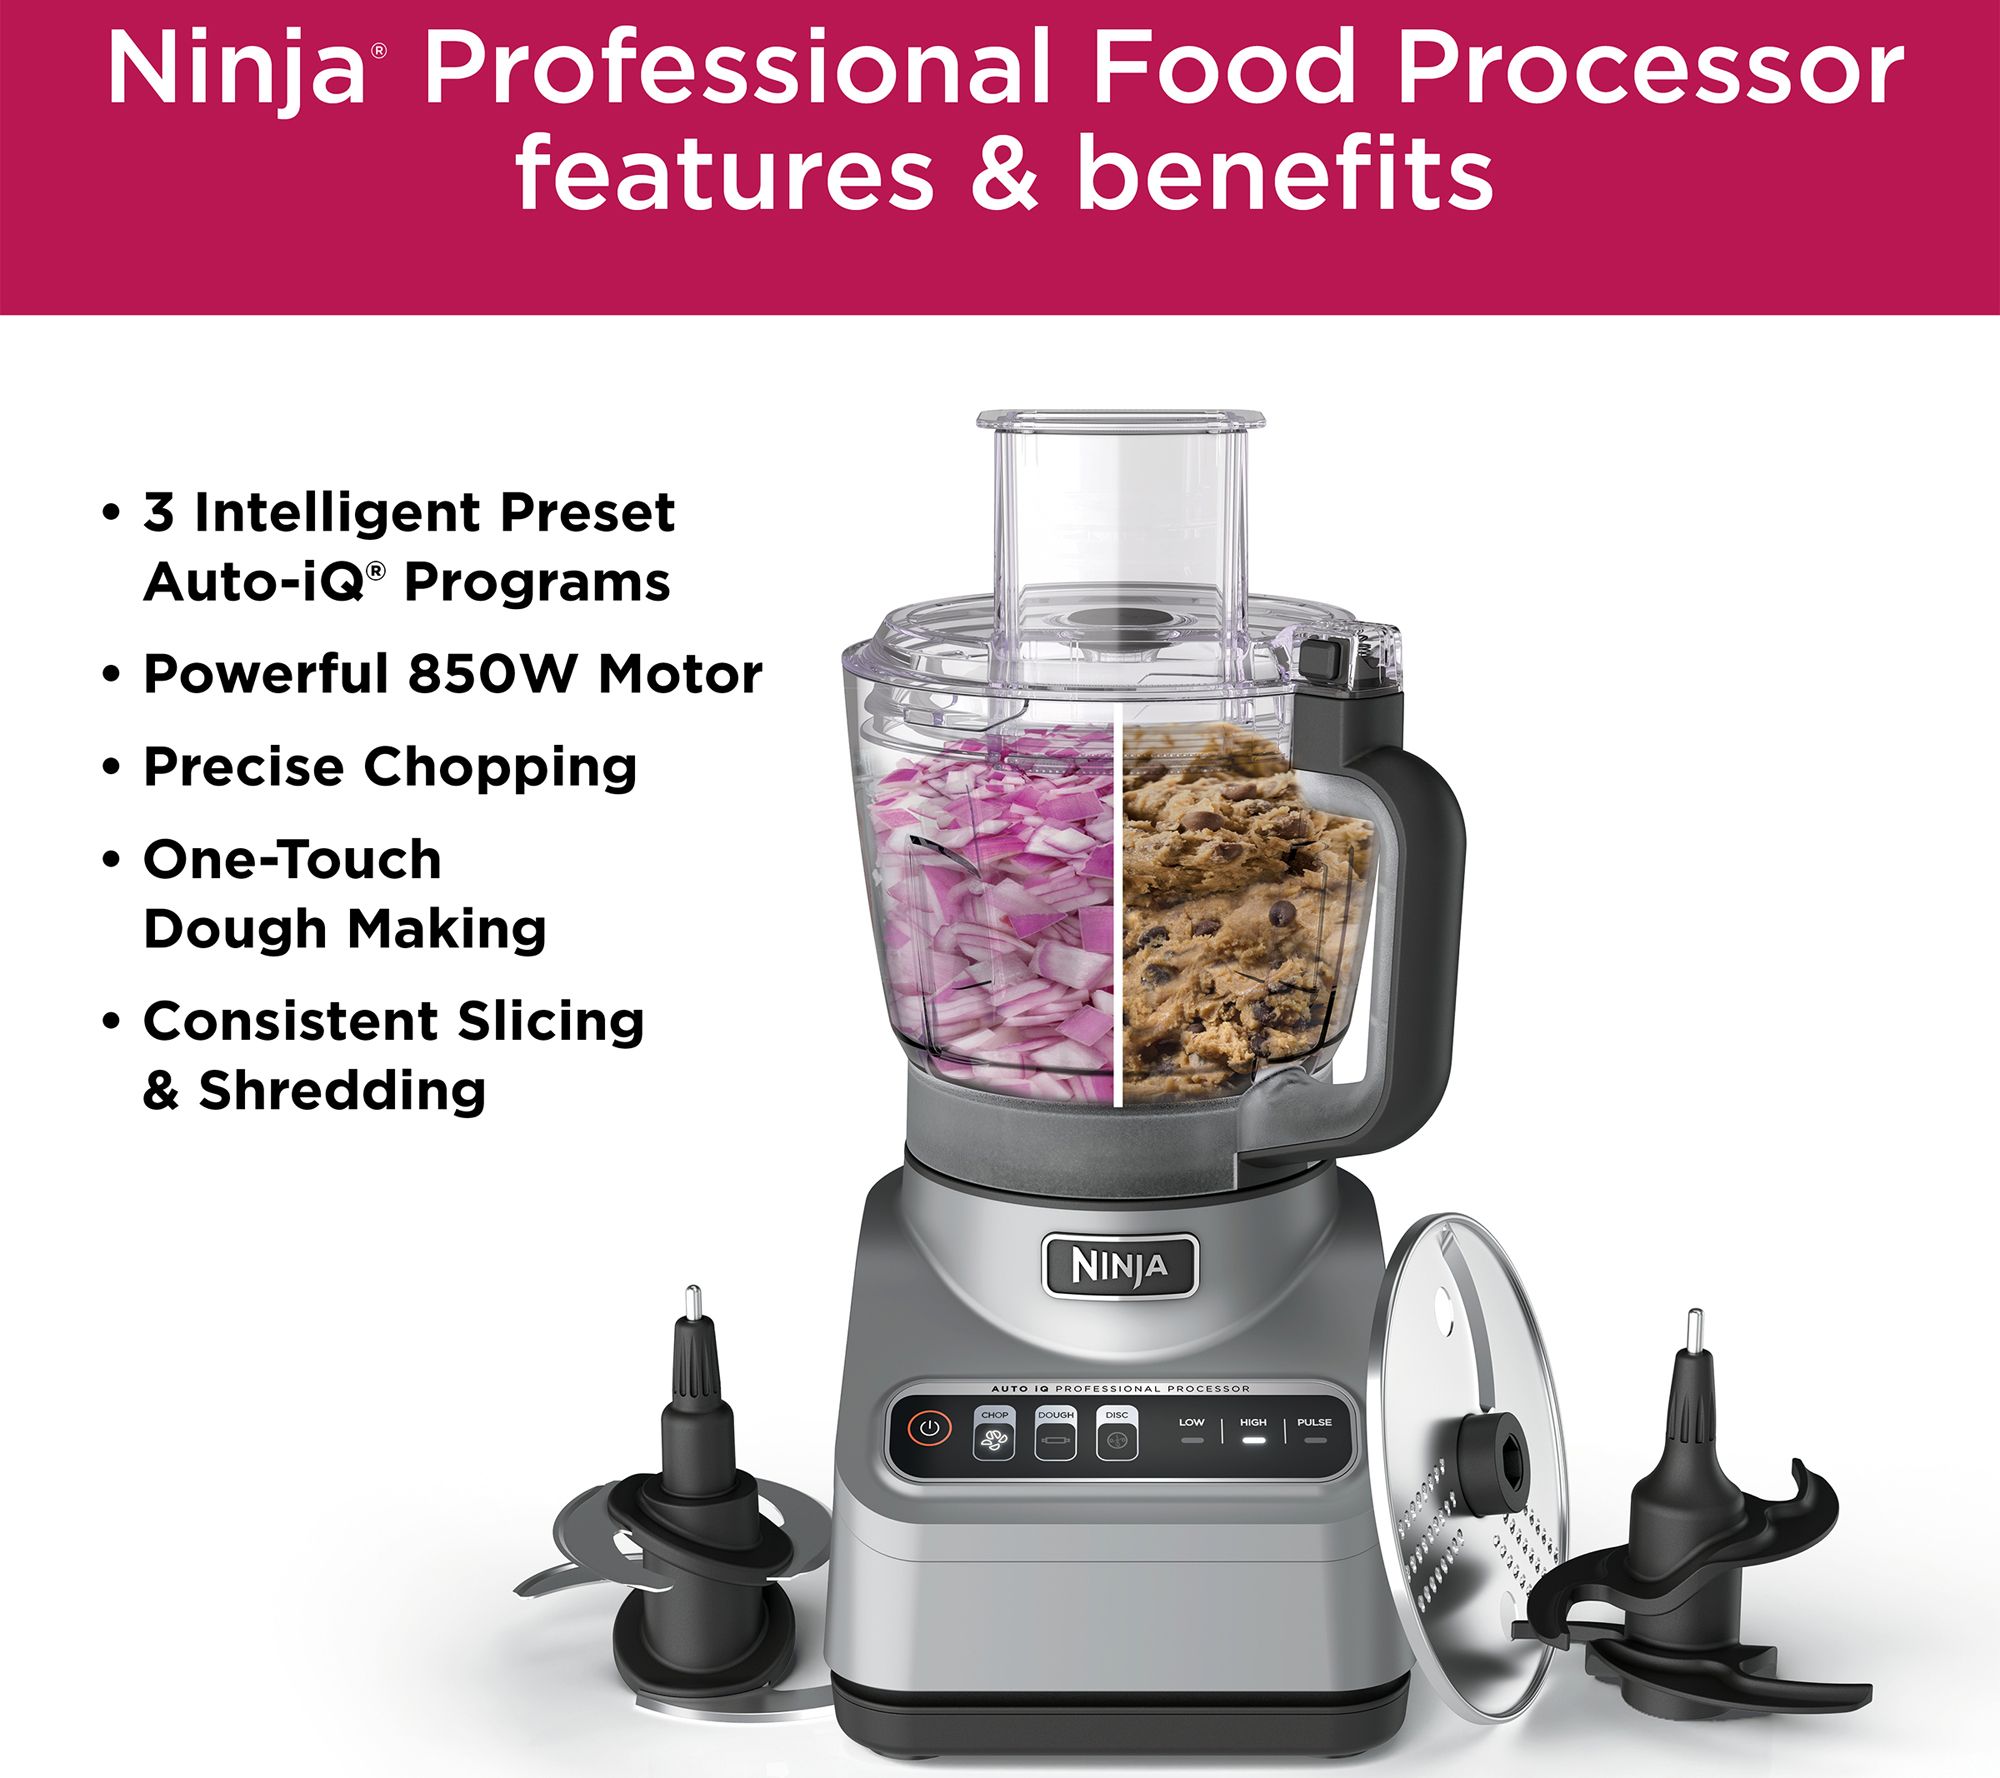 Restored Ninja BN601 Plus Food Processor 1000 Watts Autoiq, Chop Slice  Shred, 9Cup Silver Stainless (Refurbished) 